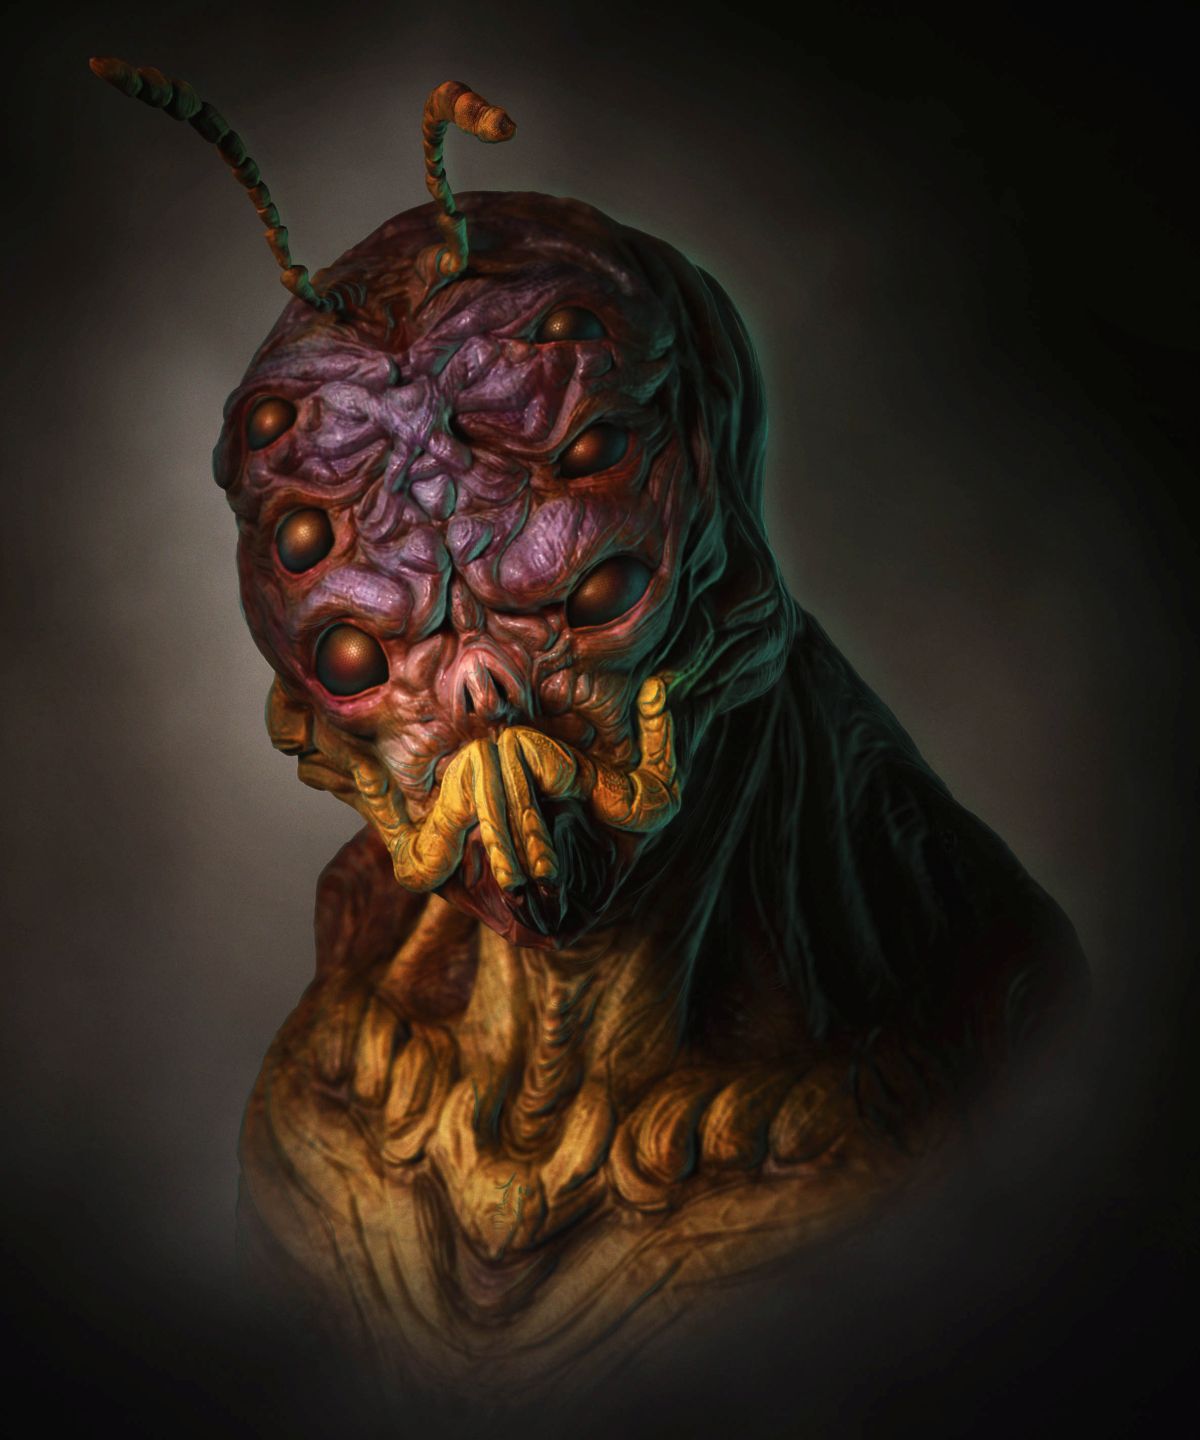 3d model alien bust by alex cobra